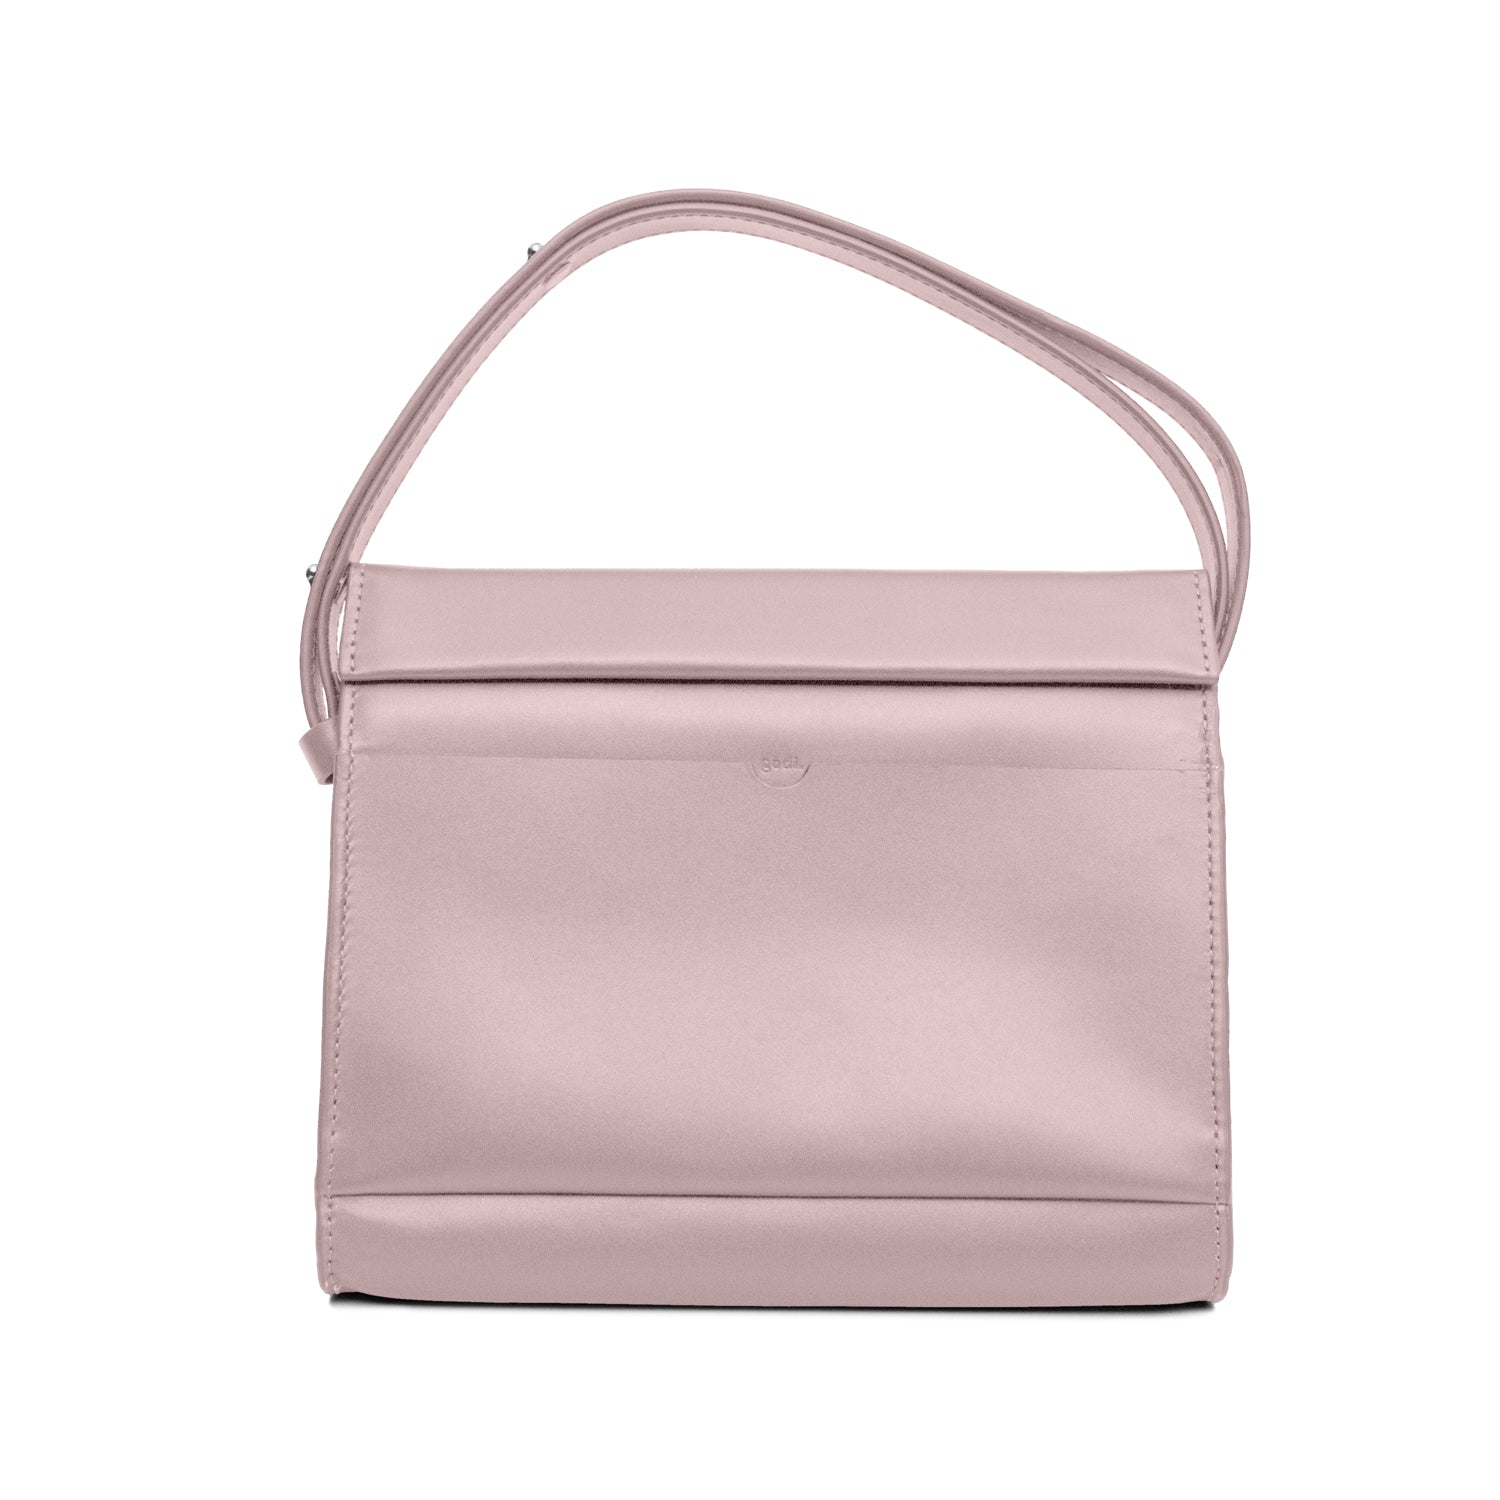 Mini Shoulder Bag in Nude Pink